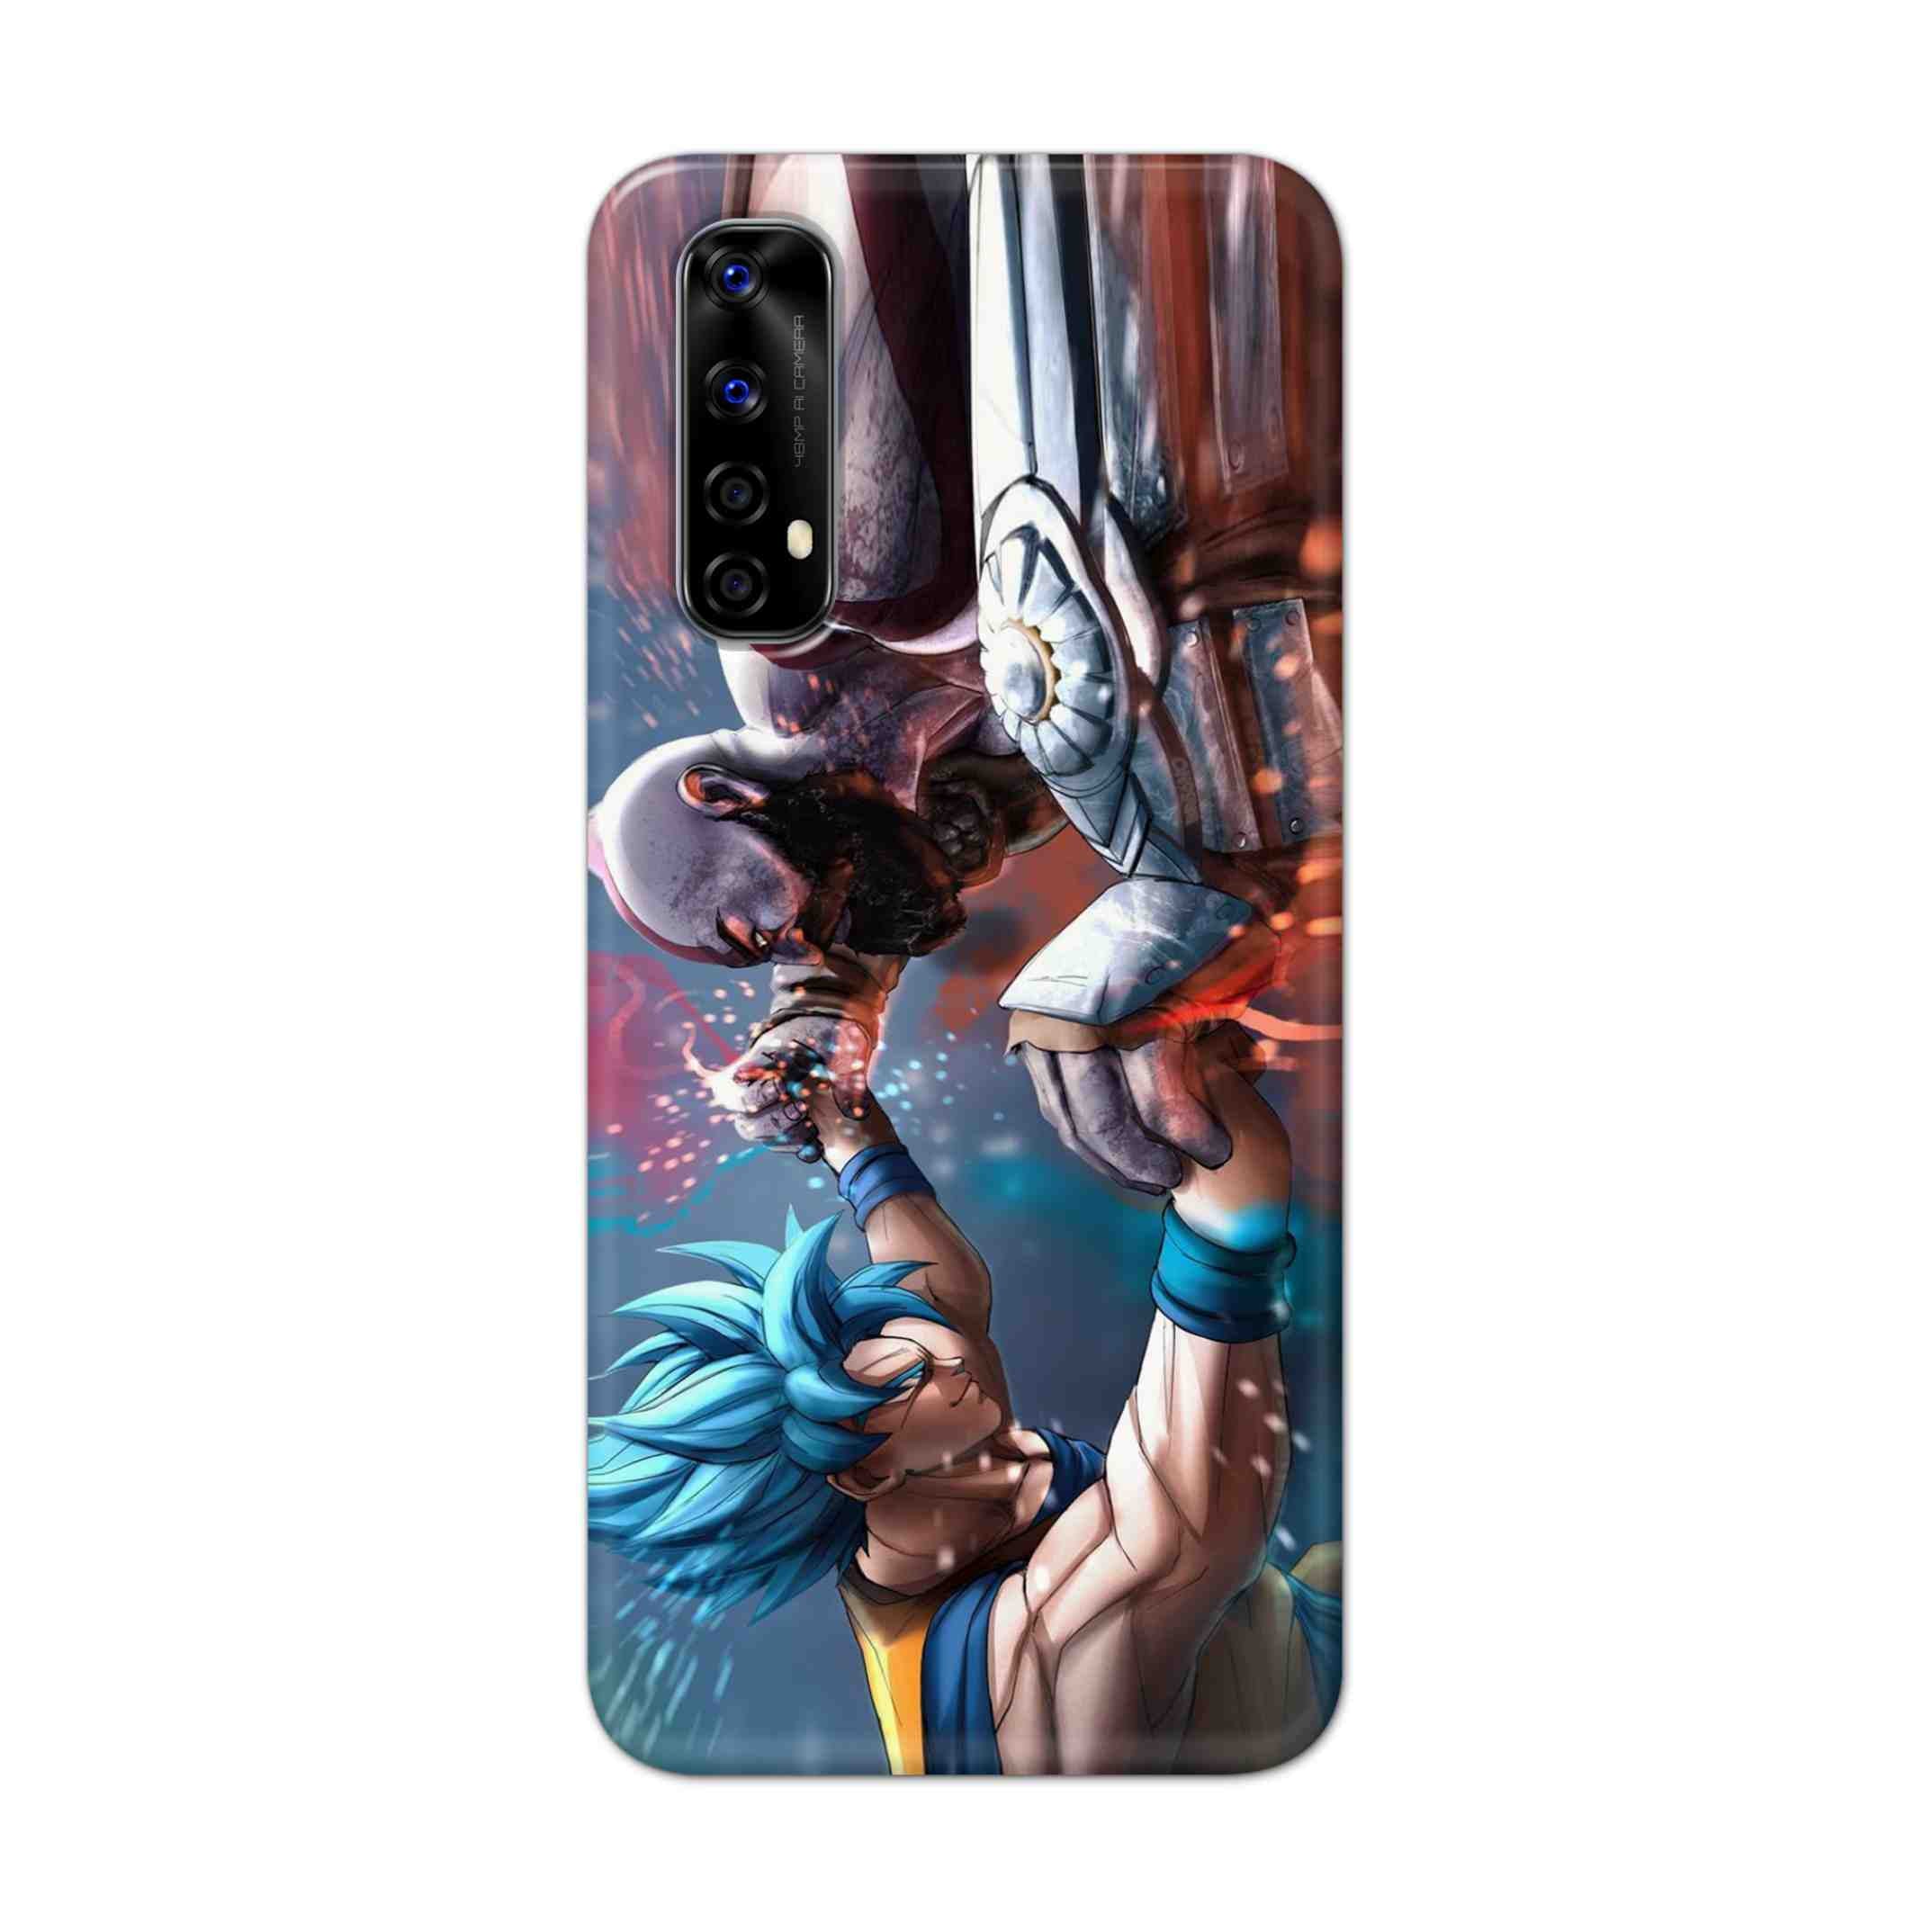 Buy Goku Vs Kratos Hard Back Mobile Phone Case Cover For Realme Narzo 20 Pro Online